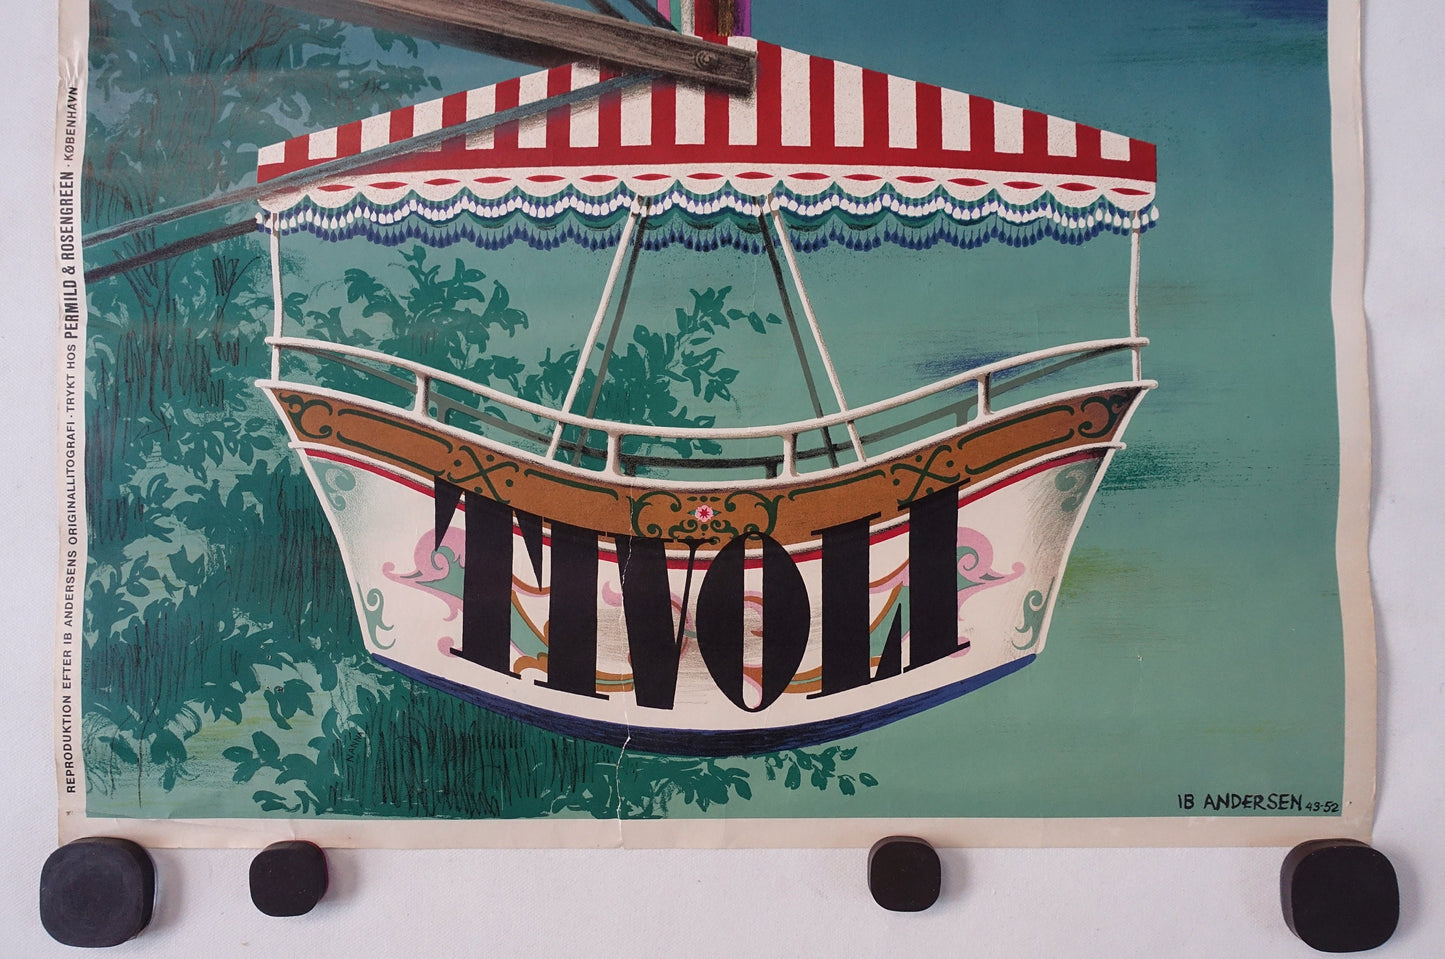 1943 Tivoli Gardens by Ib Andersen - Original Vintage poster